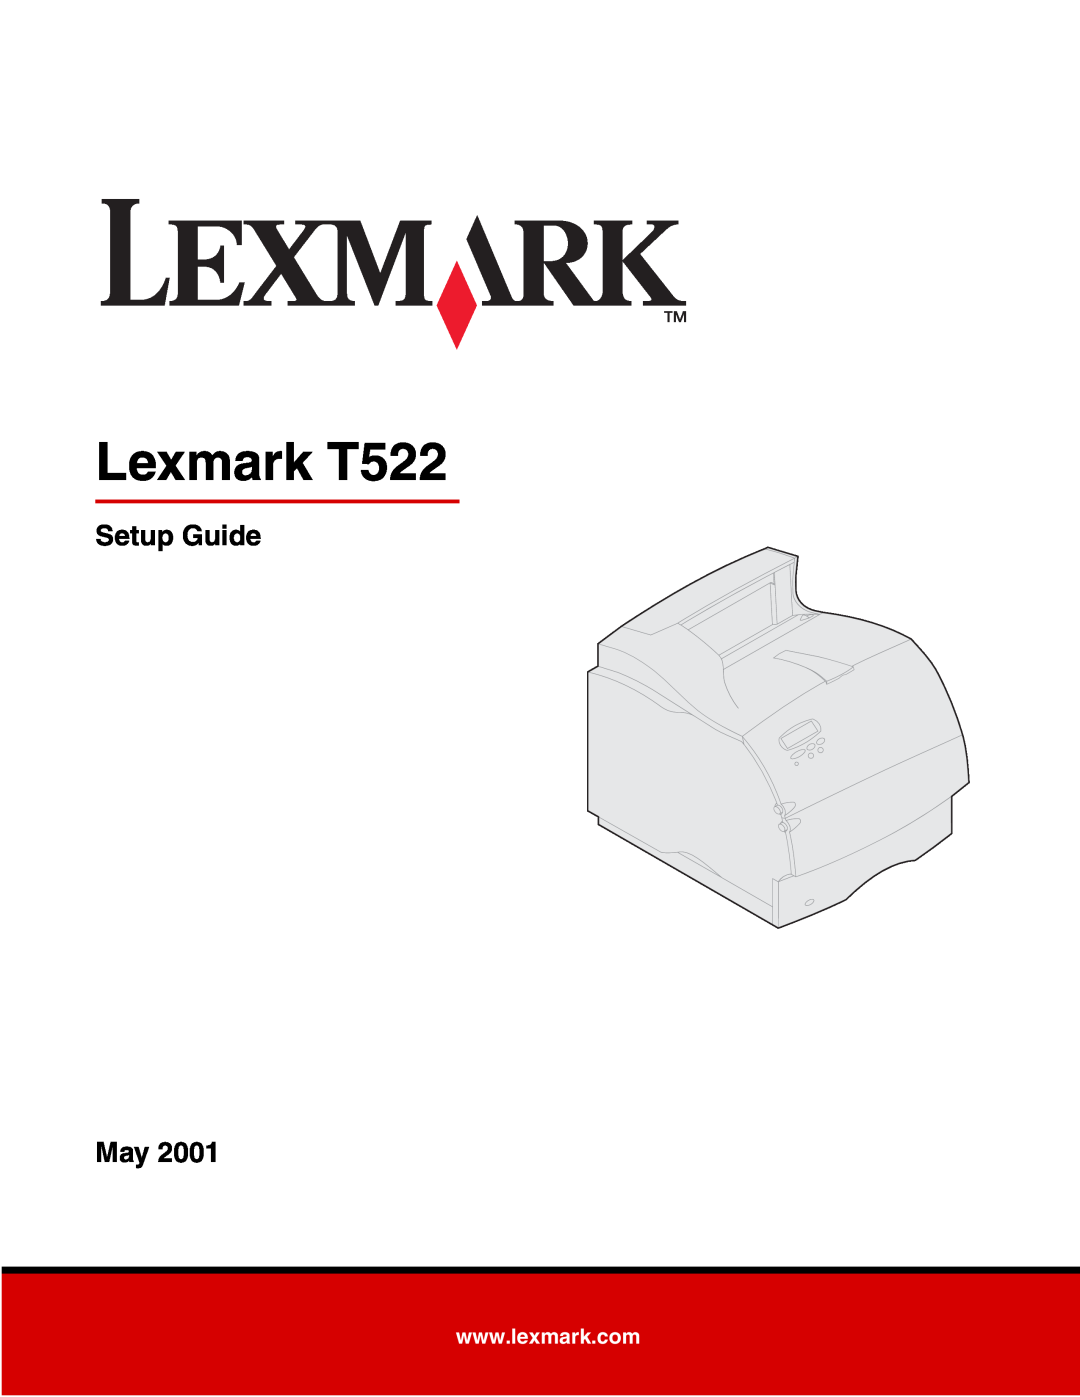 Lexmark setup guide Lexmark T522, Setup Guide May 